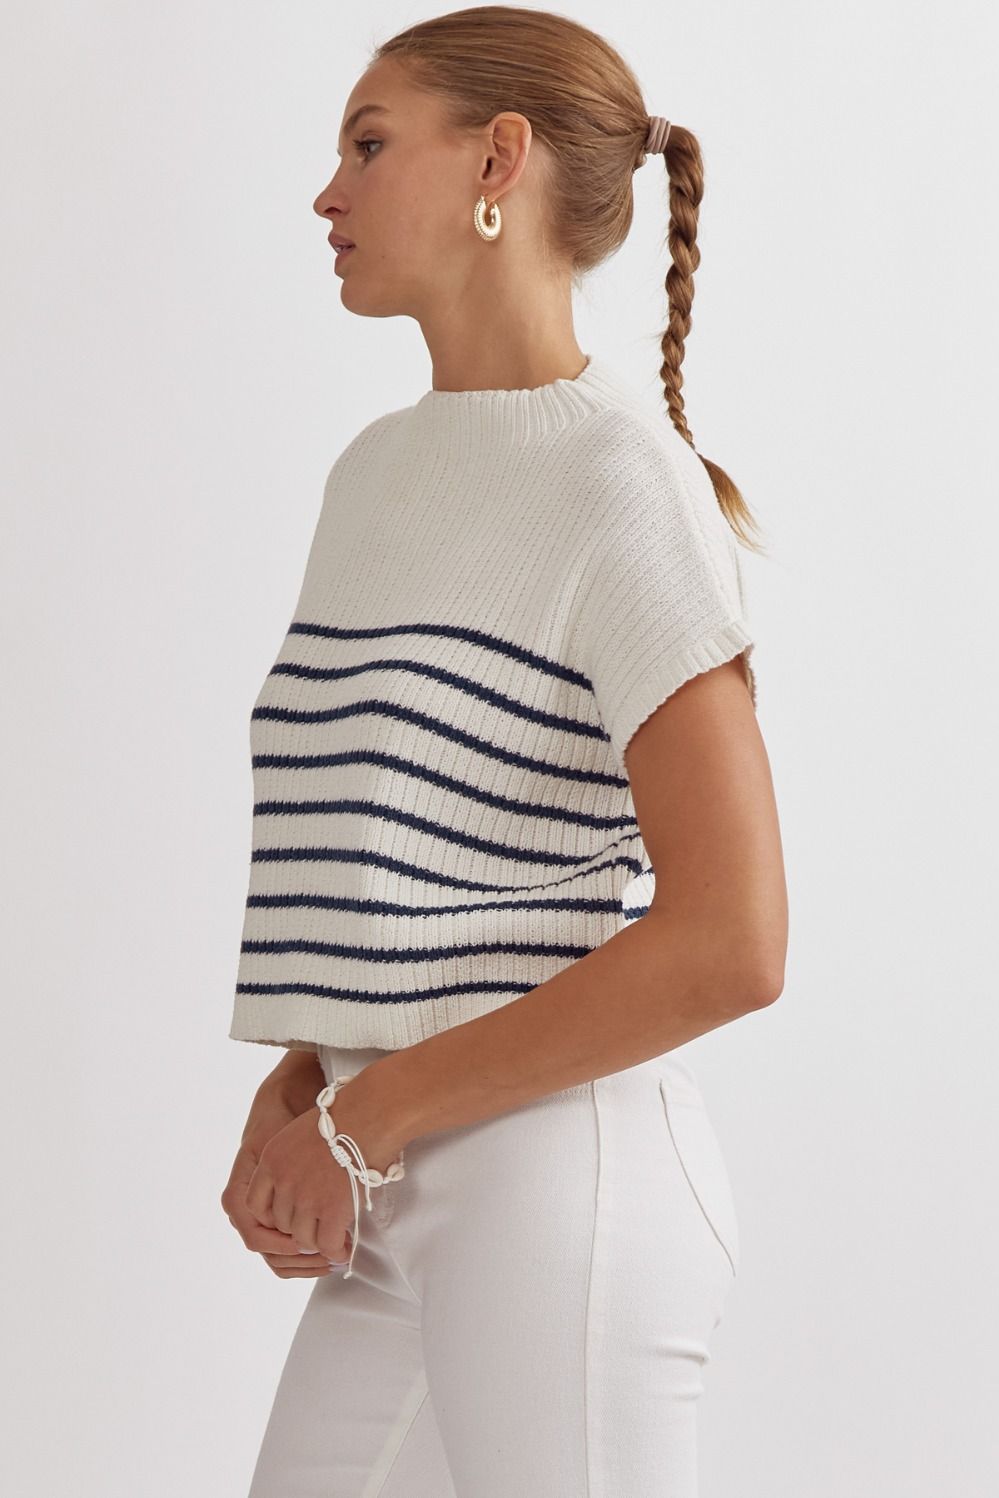 Spring Nautical Sweater - Navy